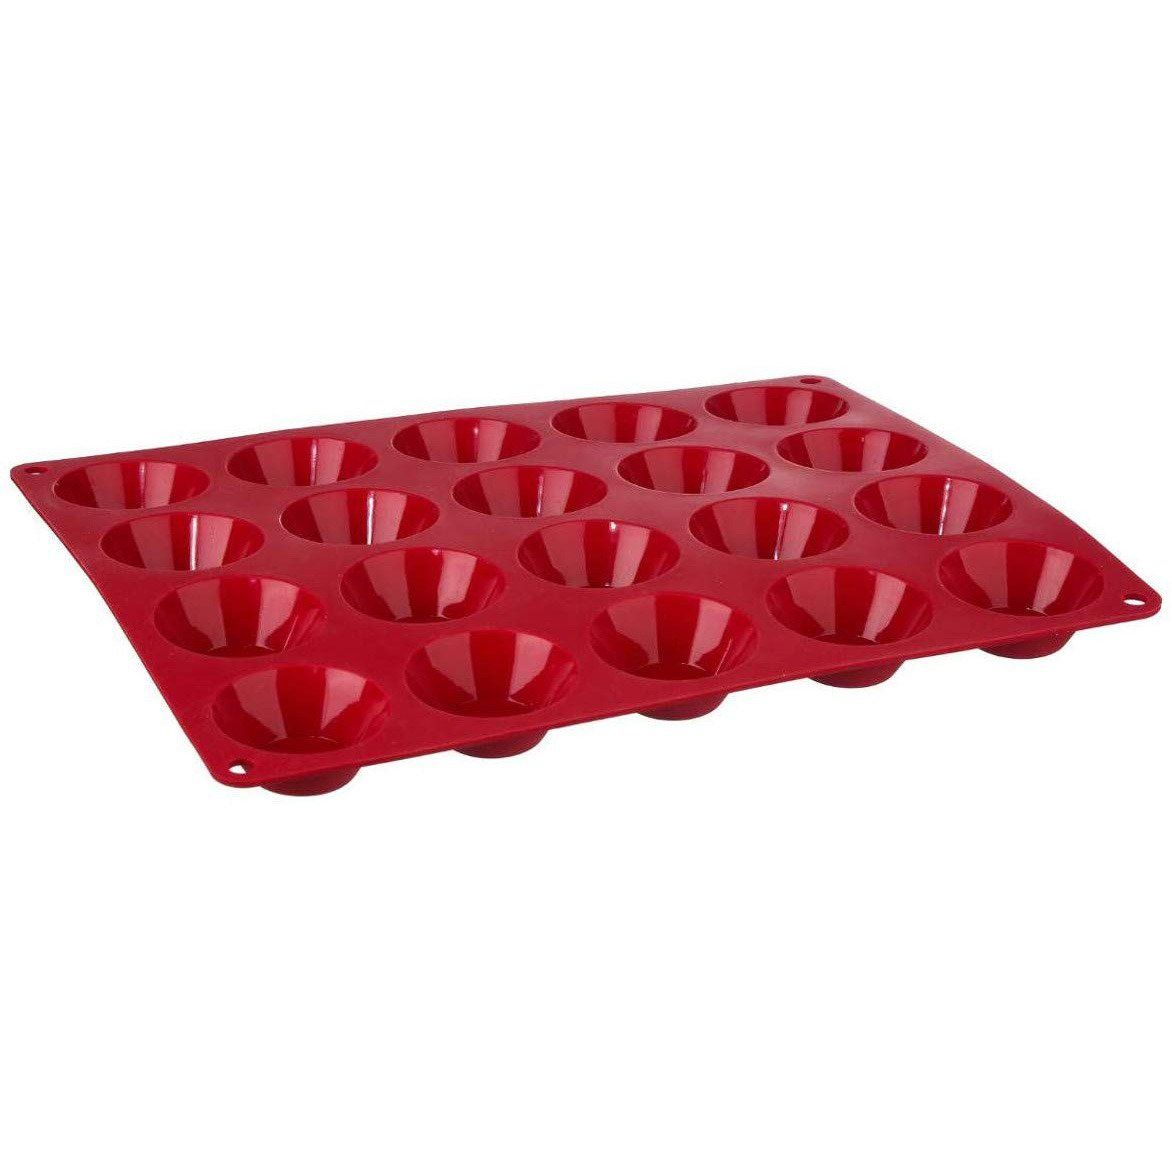 Secret de Gourmet Silikonový tvar pro 20 pralinek, 30 x 30 cm, červený - EDAXO.CZ s.r.o.